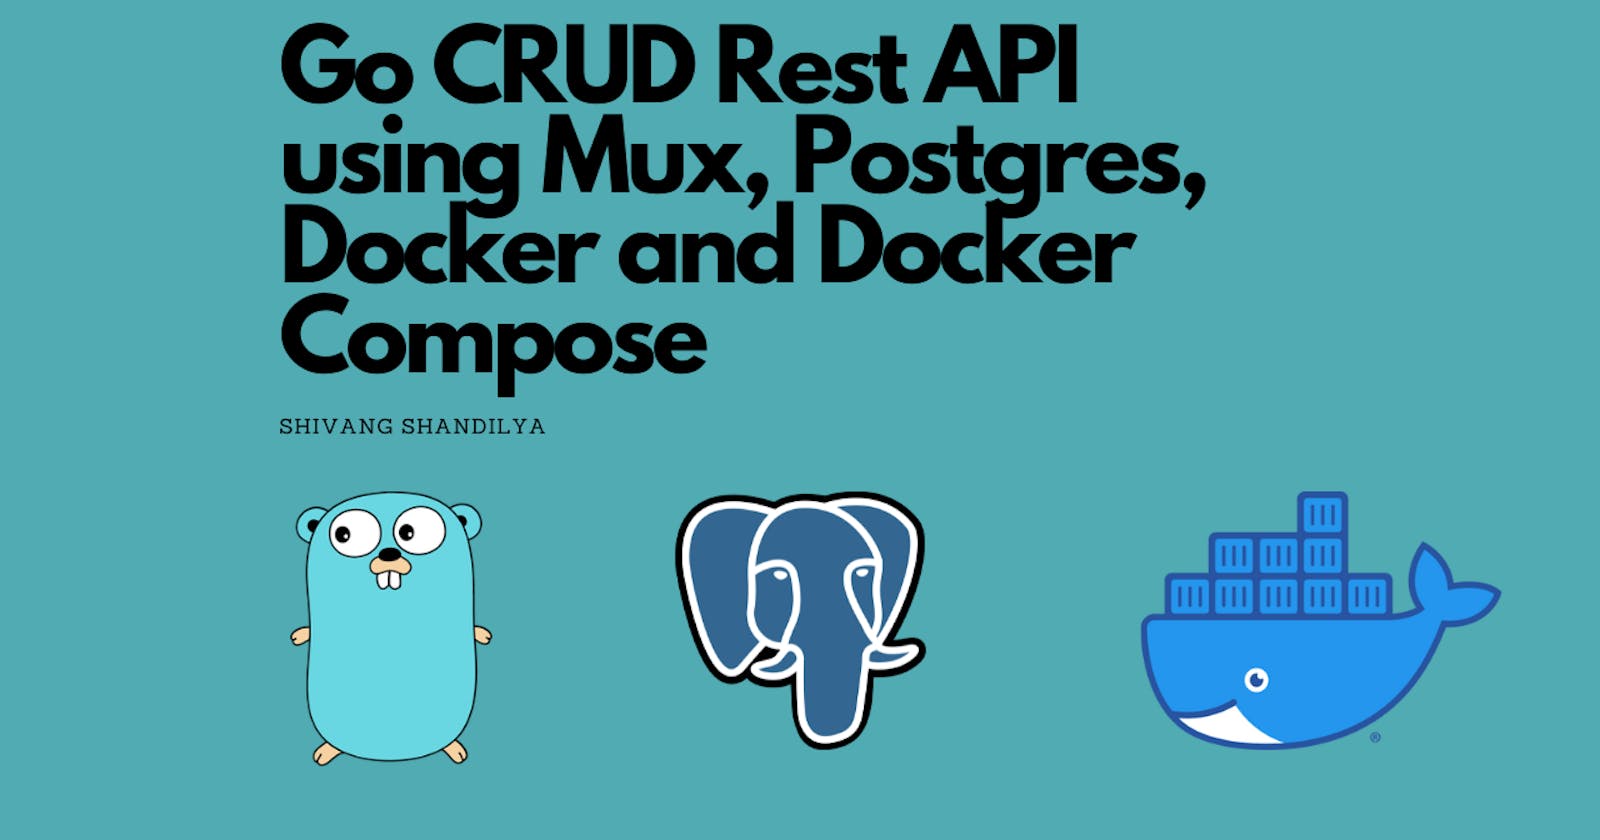 Building a GO CRUD Rest API from scratch